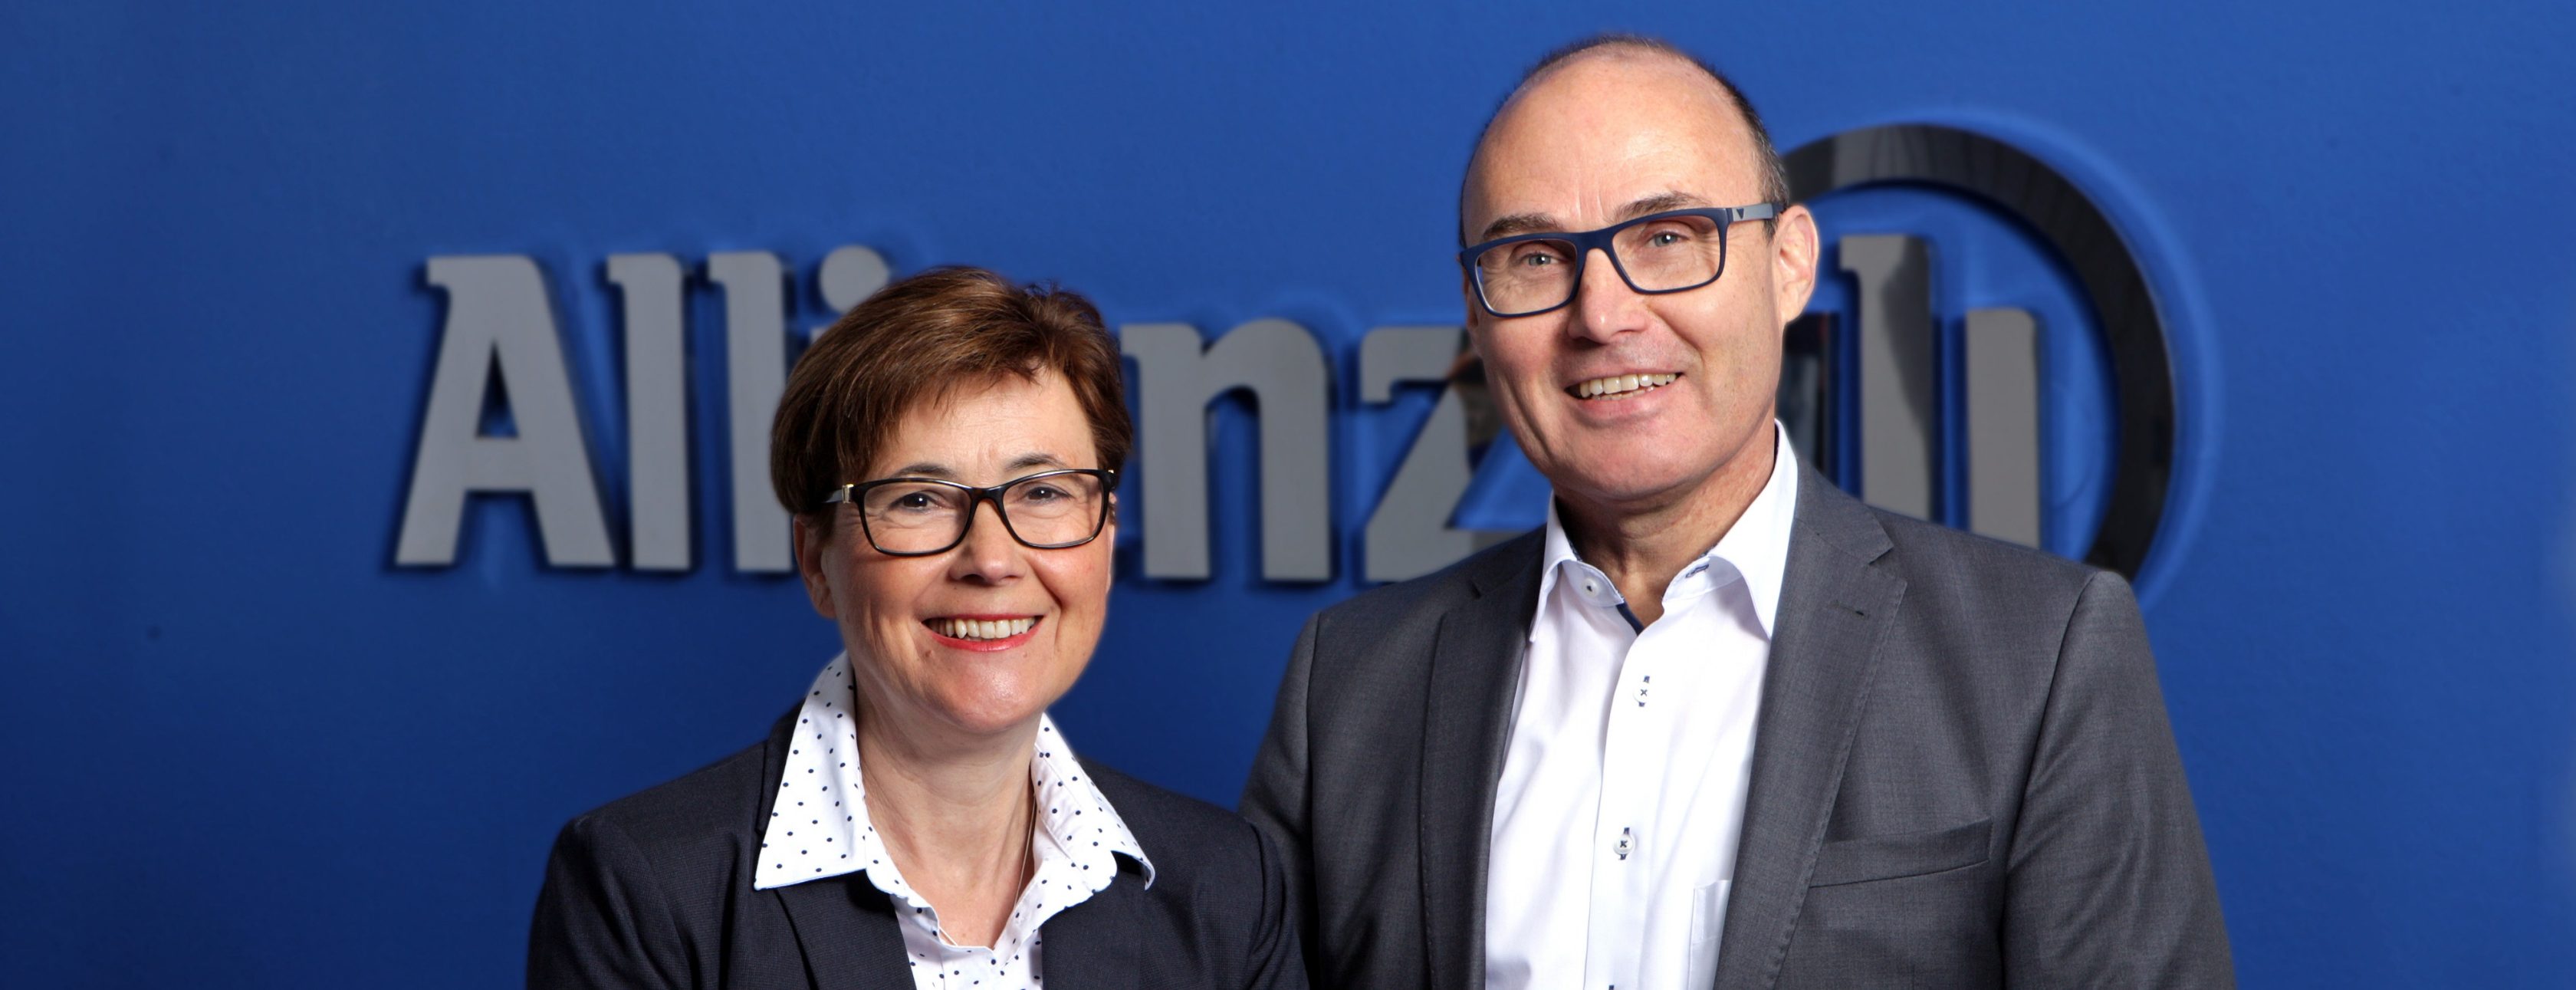 Allianz Versicherung Uwe Kretzschmar Düren - Agentur Uwe Kretzschmar